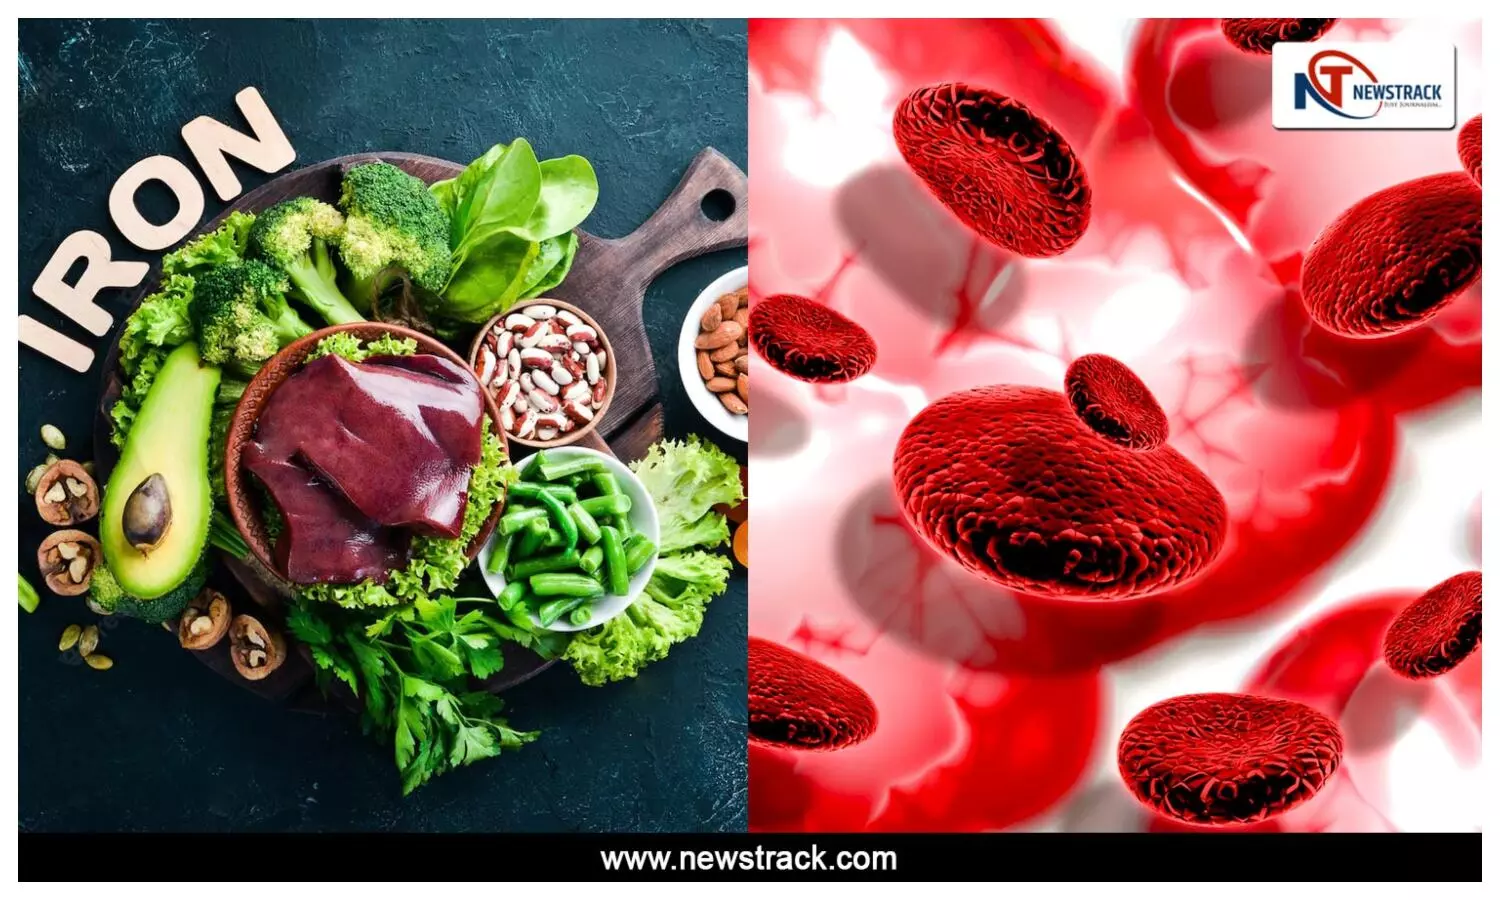 Iron rich food increases hemoglobin